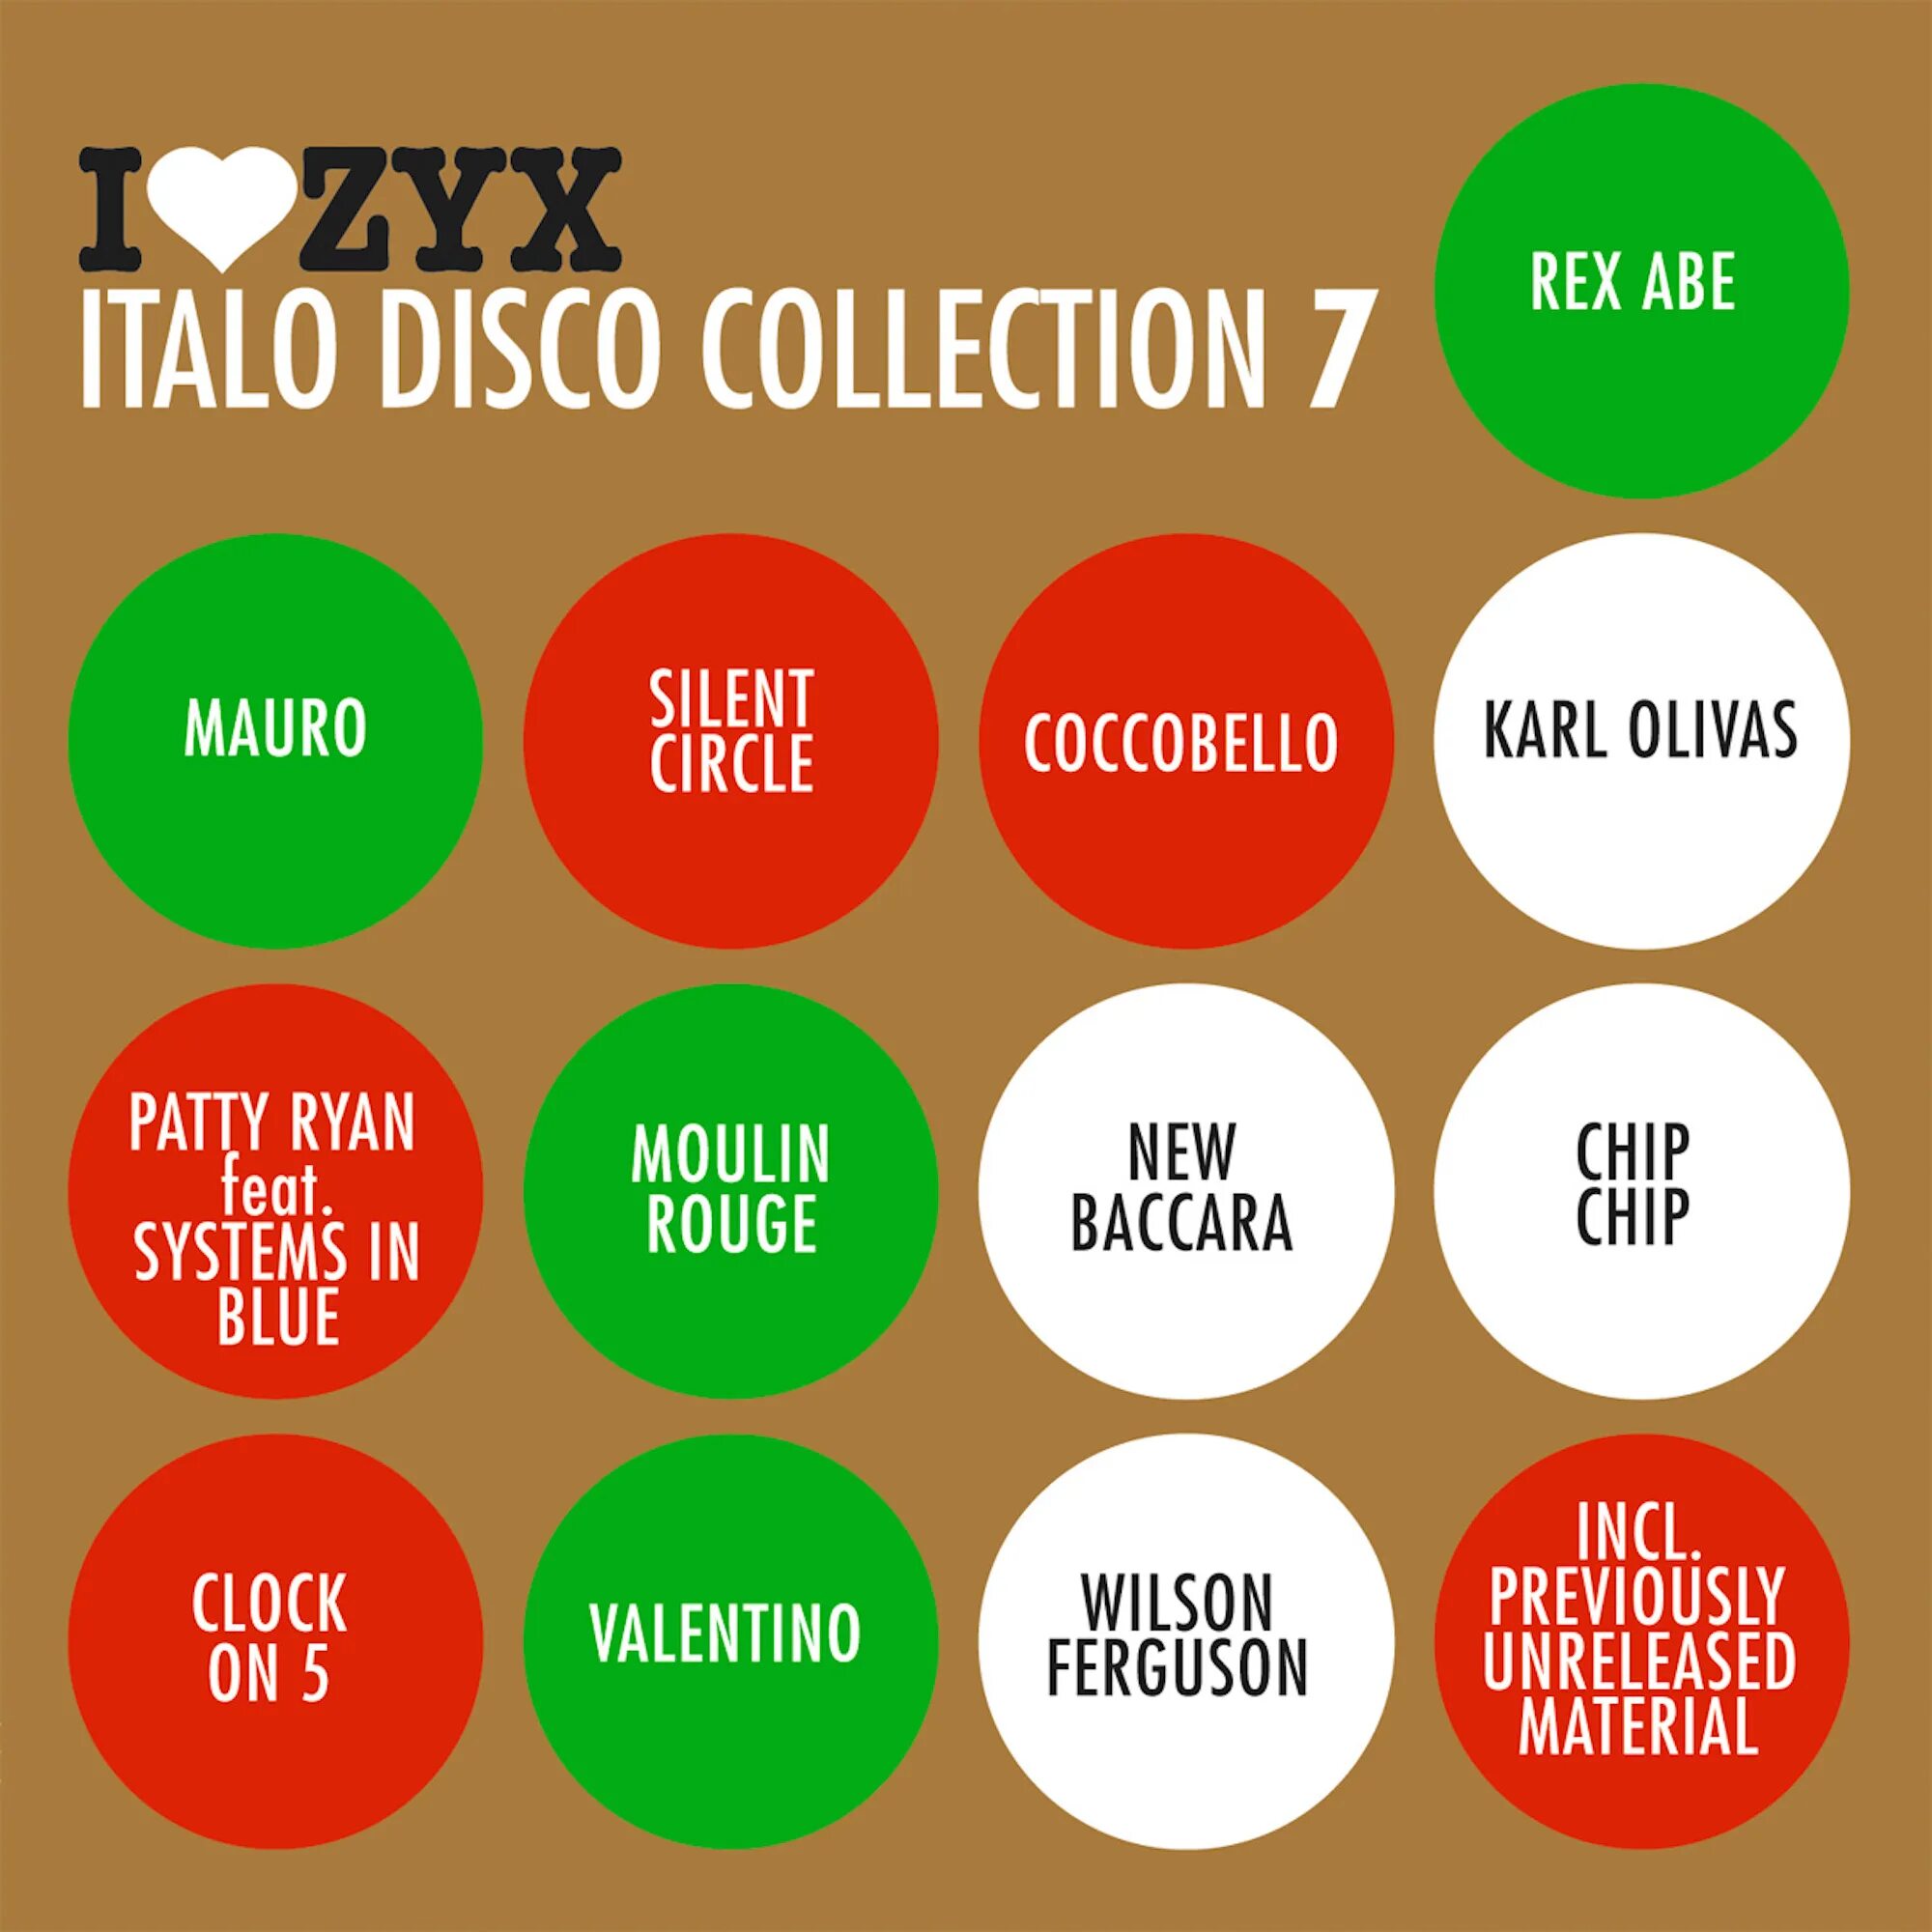 2007 I Love ZYX Italo Disco collection Vol.7. ZYX Disco collection. ZYX Italo Disco Spacesynth collection 7. Italo Disco collection фото. Italo disco collection